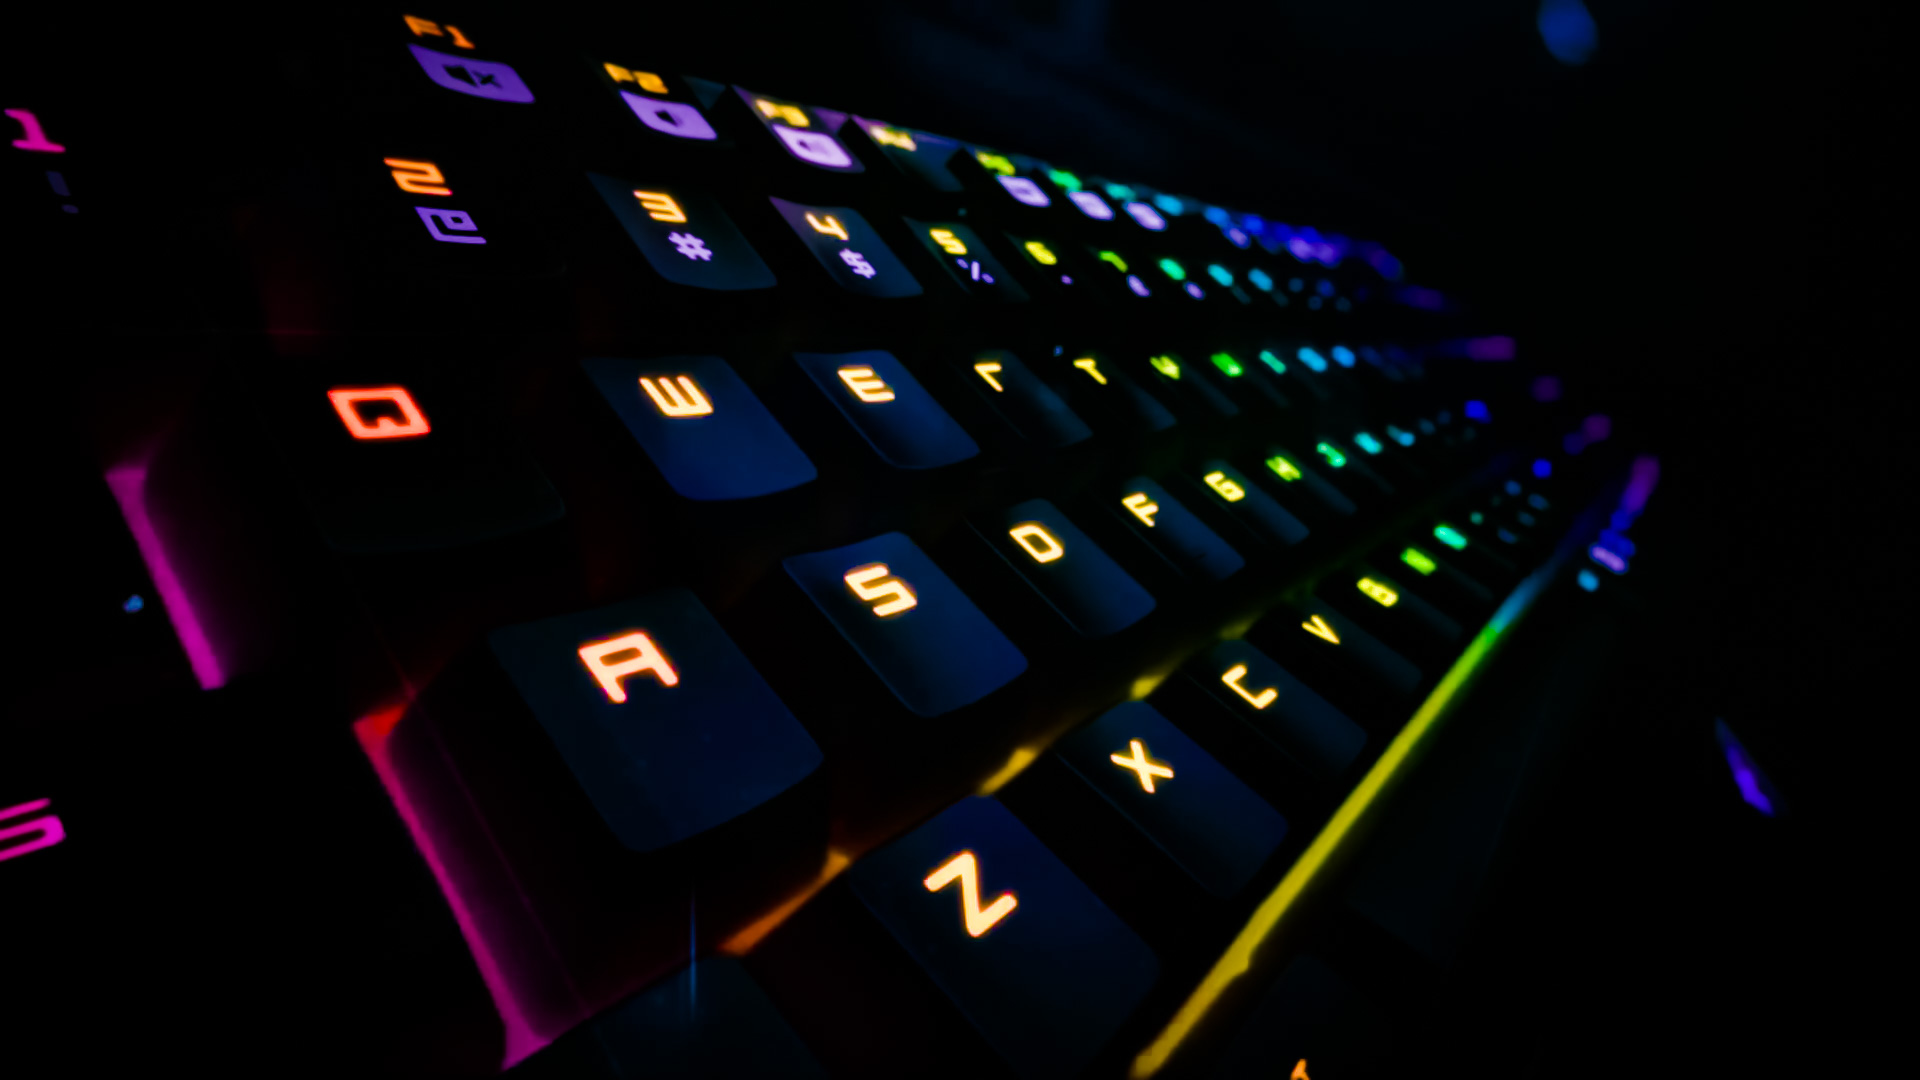 razer-chroma-blackwidow-usage-example-profile-press-shot-video-led-keyboard-gaming-gear-equipment